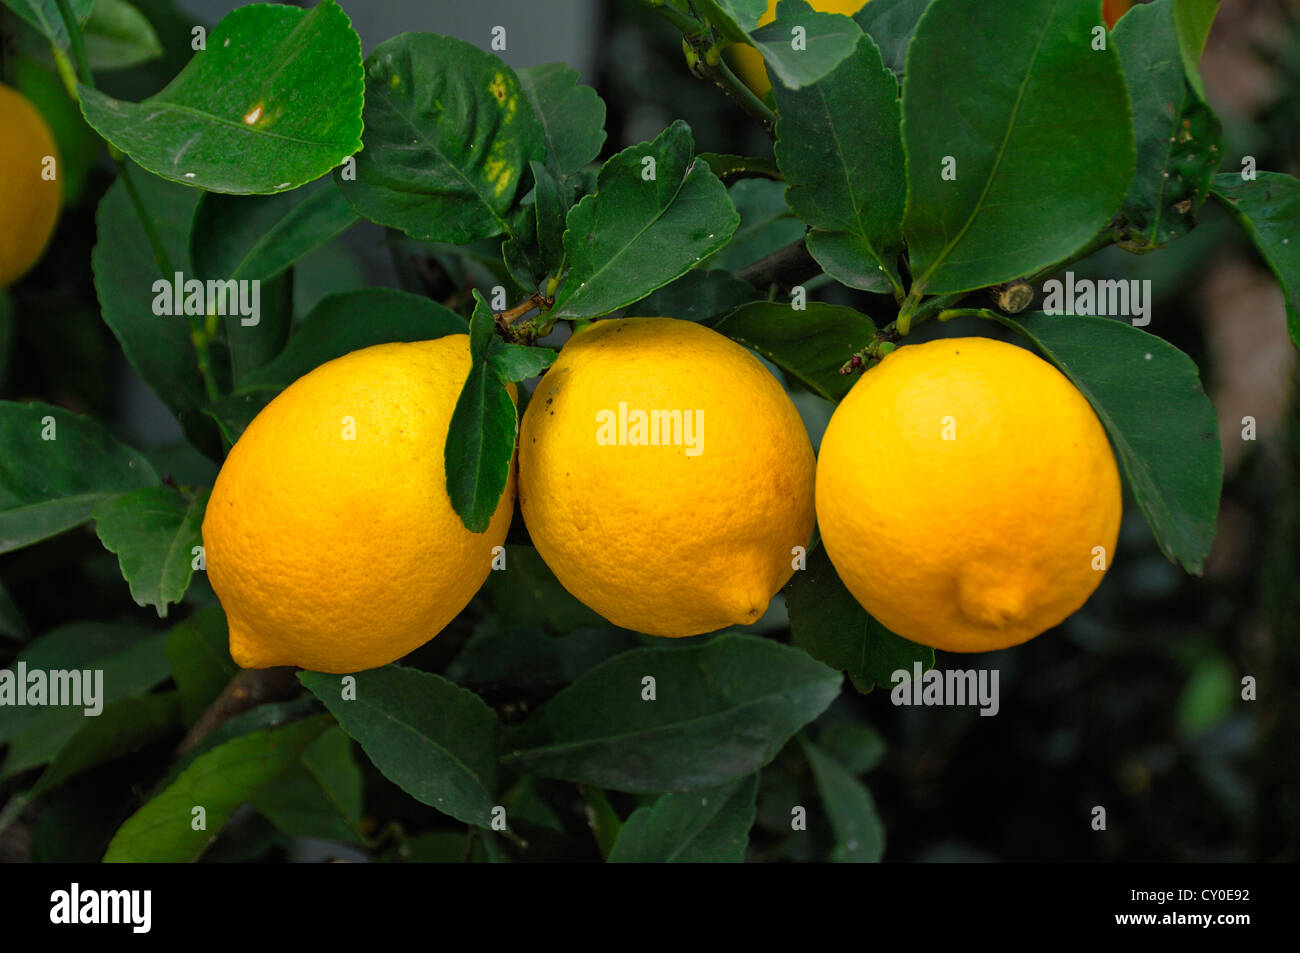 Lemons (Citrus limon) on a twig Stock Photo